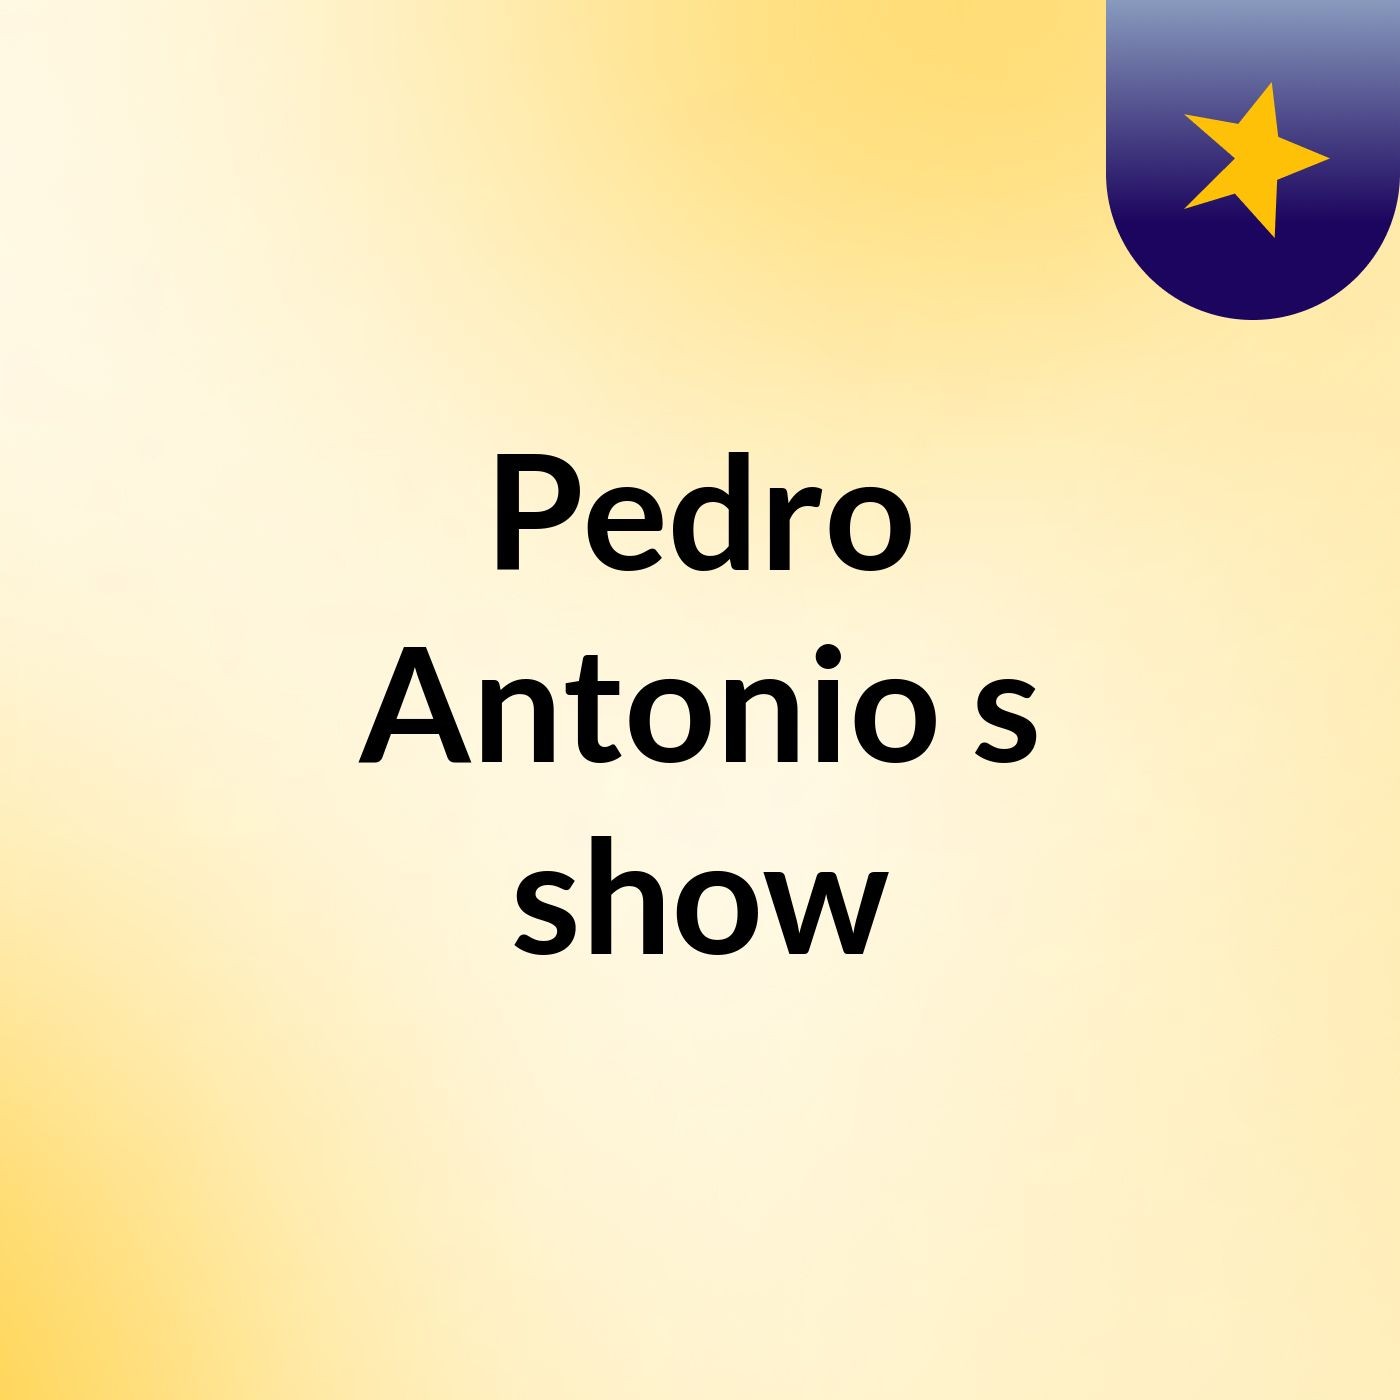 Pedro Antonio's show